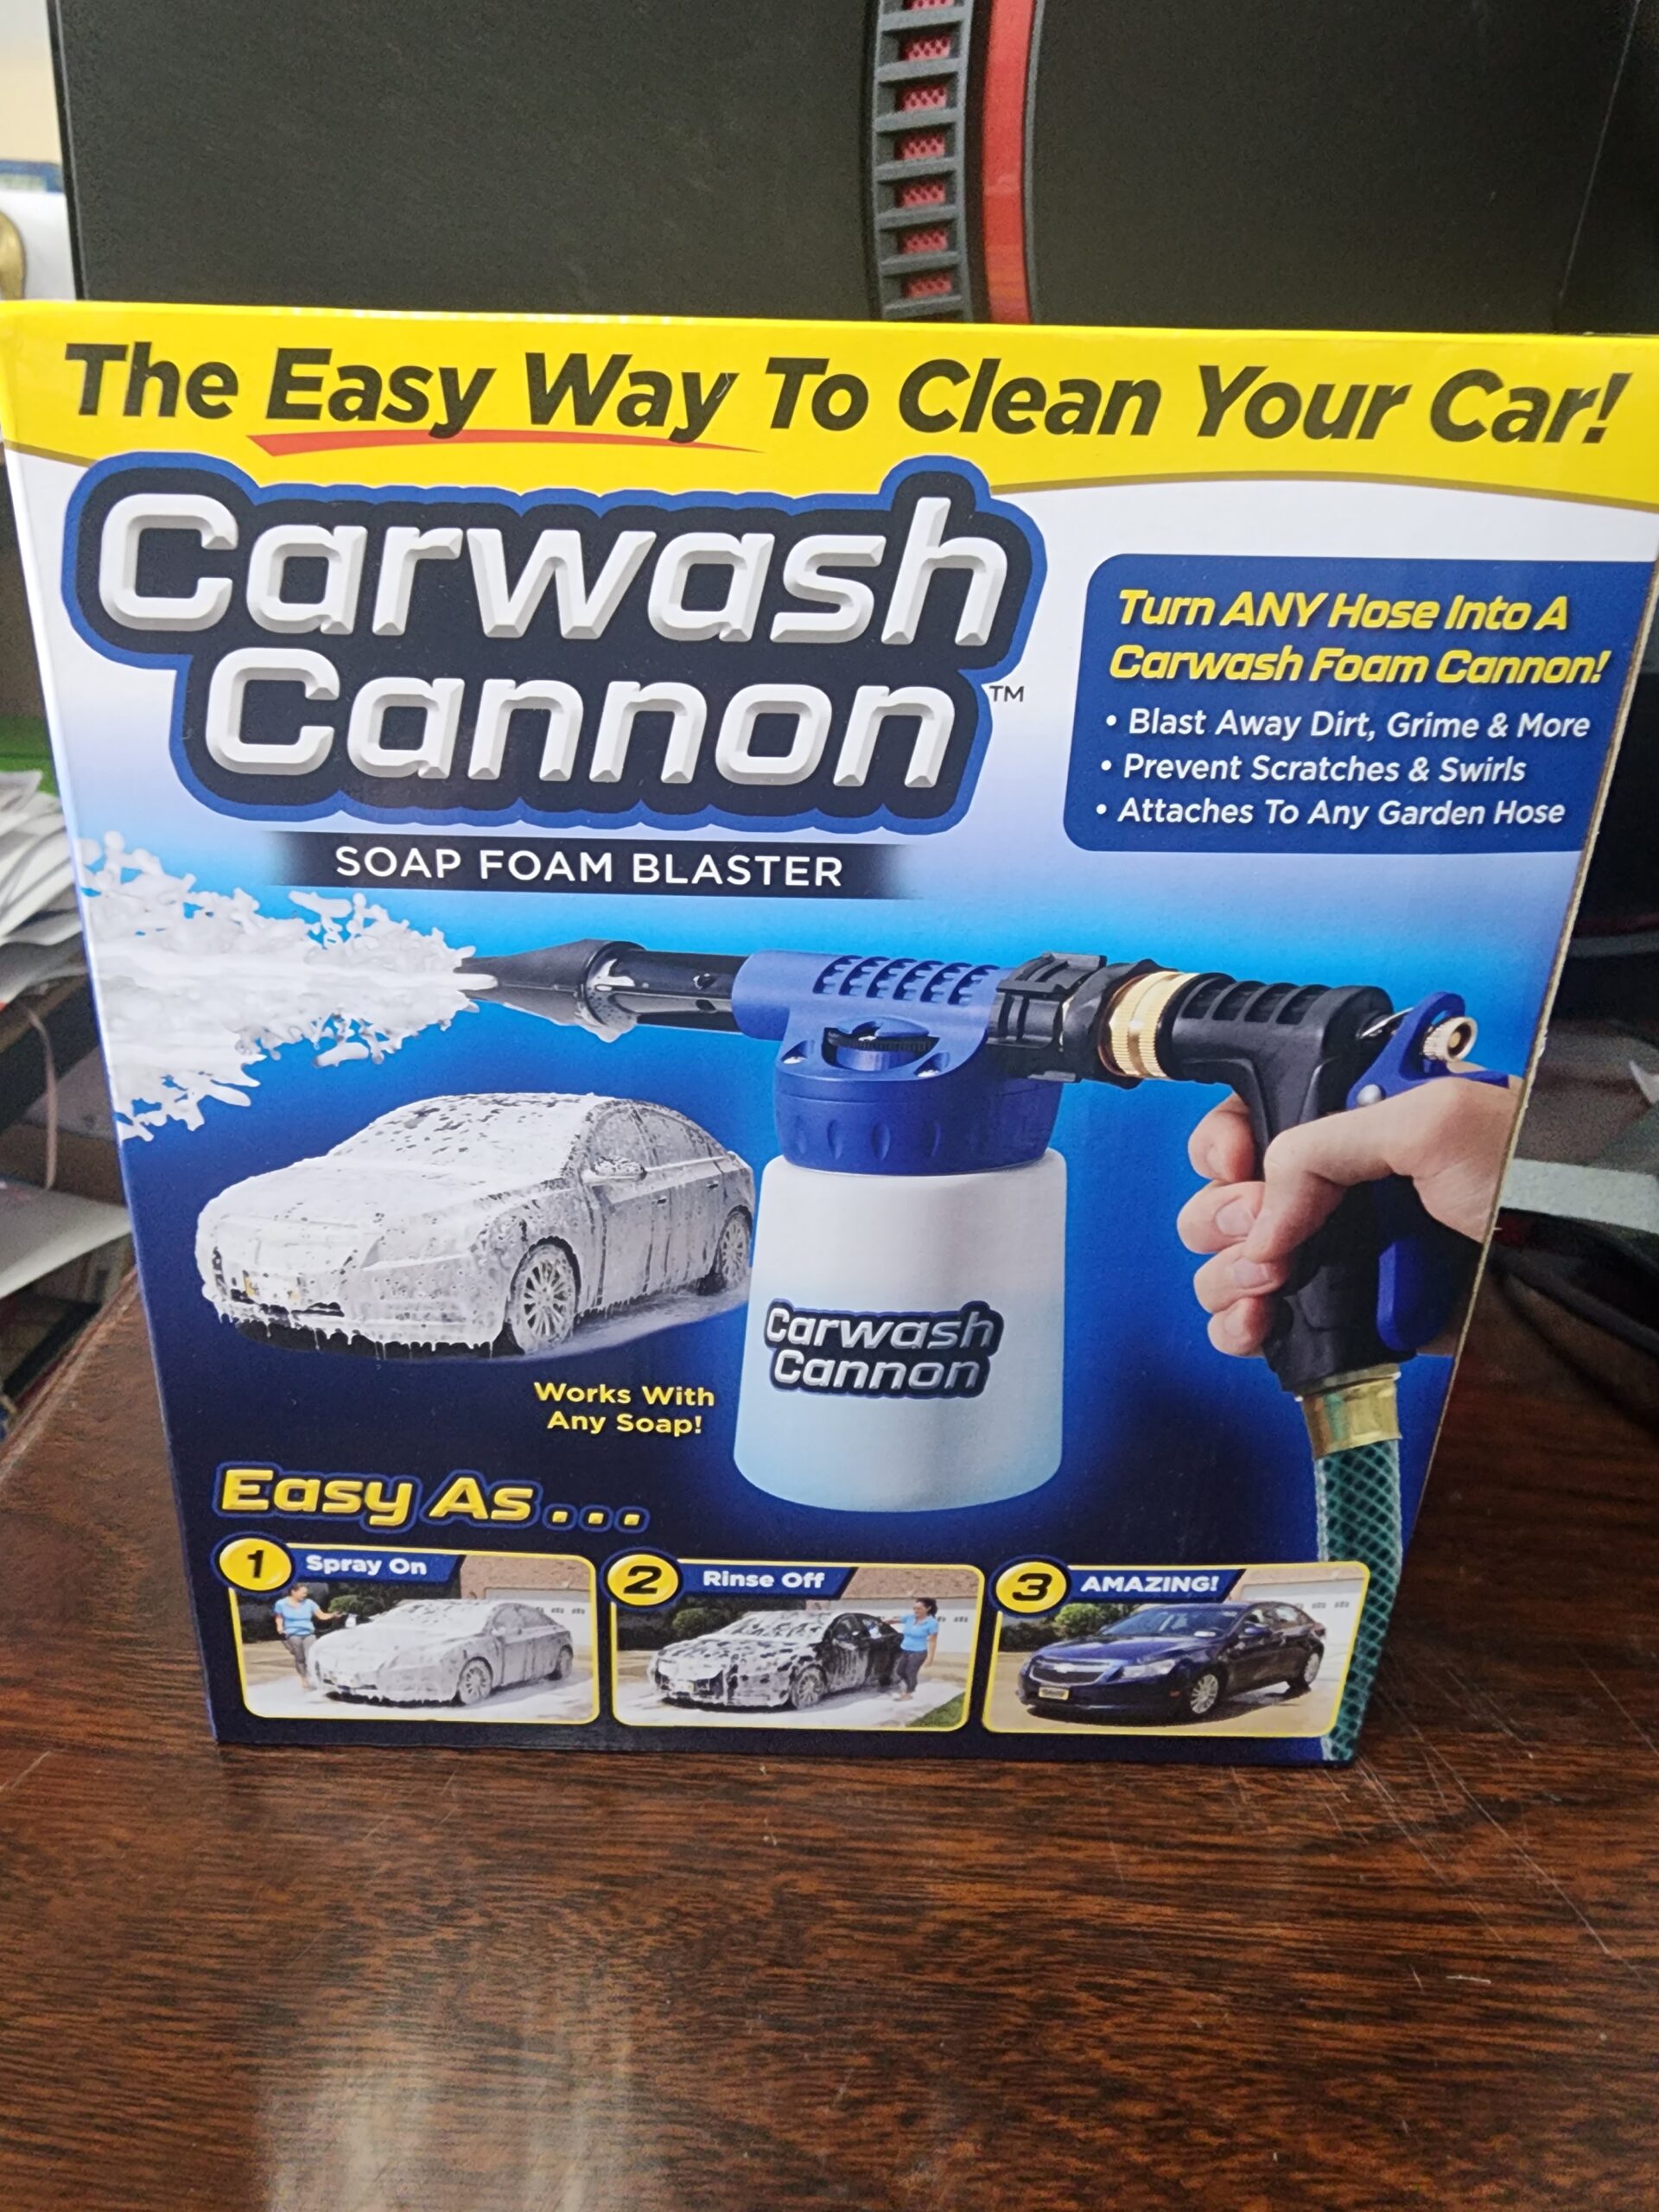 Carwash Cannon Soap Foam Blaster